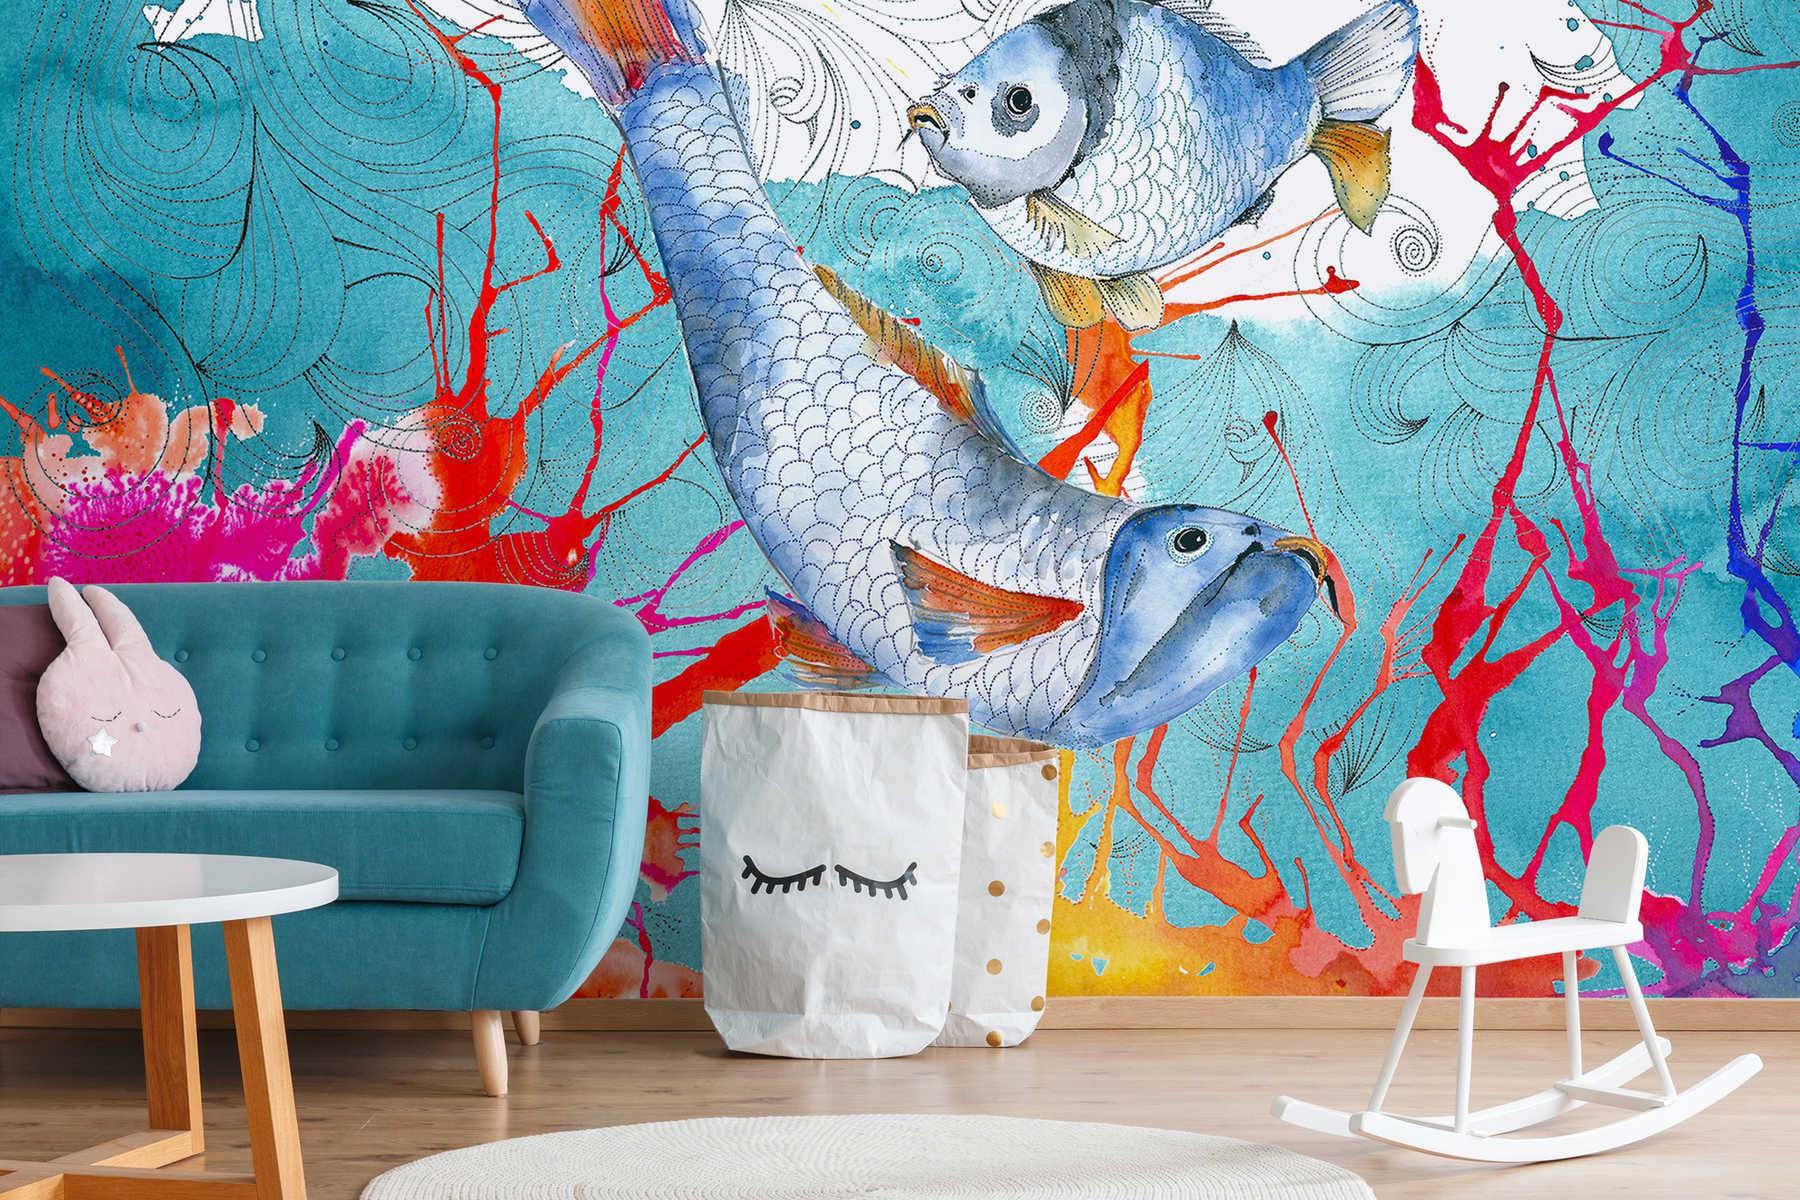             Aquarell Fototapete Fisch Motiv in Blau und Rosa auf Premium Glattvlies
        